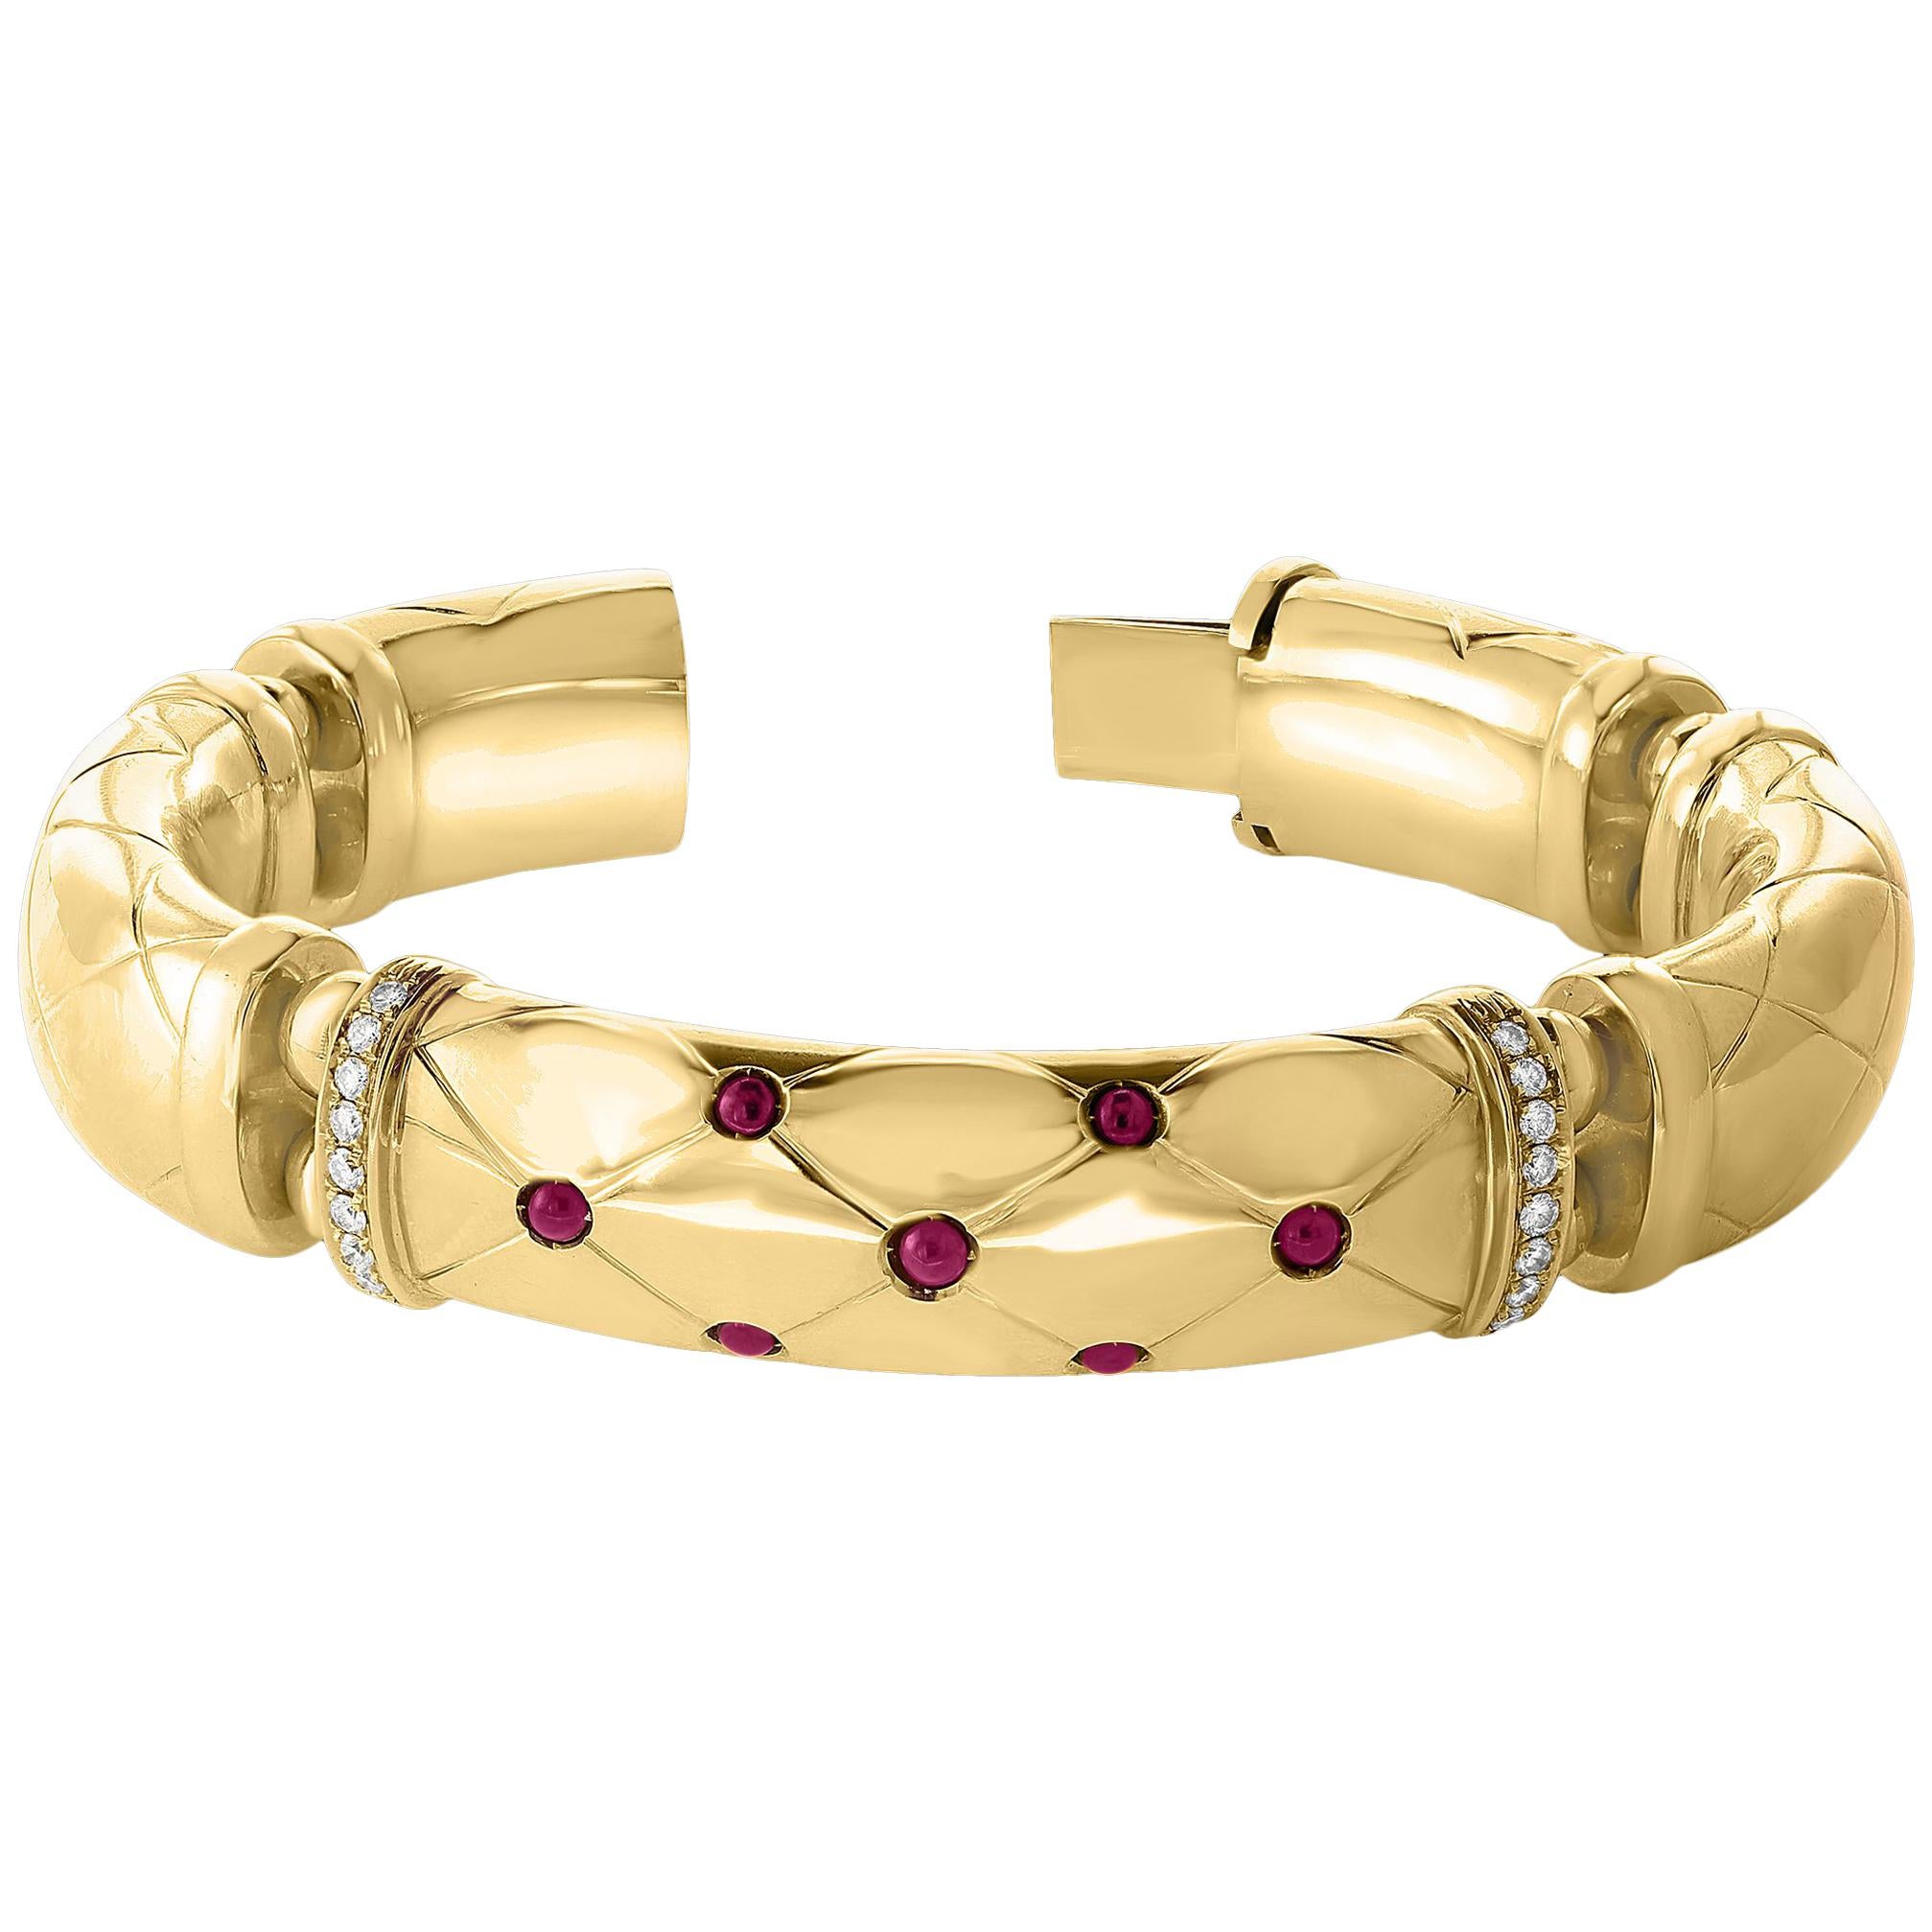 18 Karat Yellow Gold 94 Grams and Ruby Diamond Bangle or Bracelet, Estate